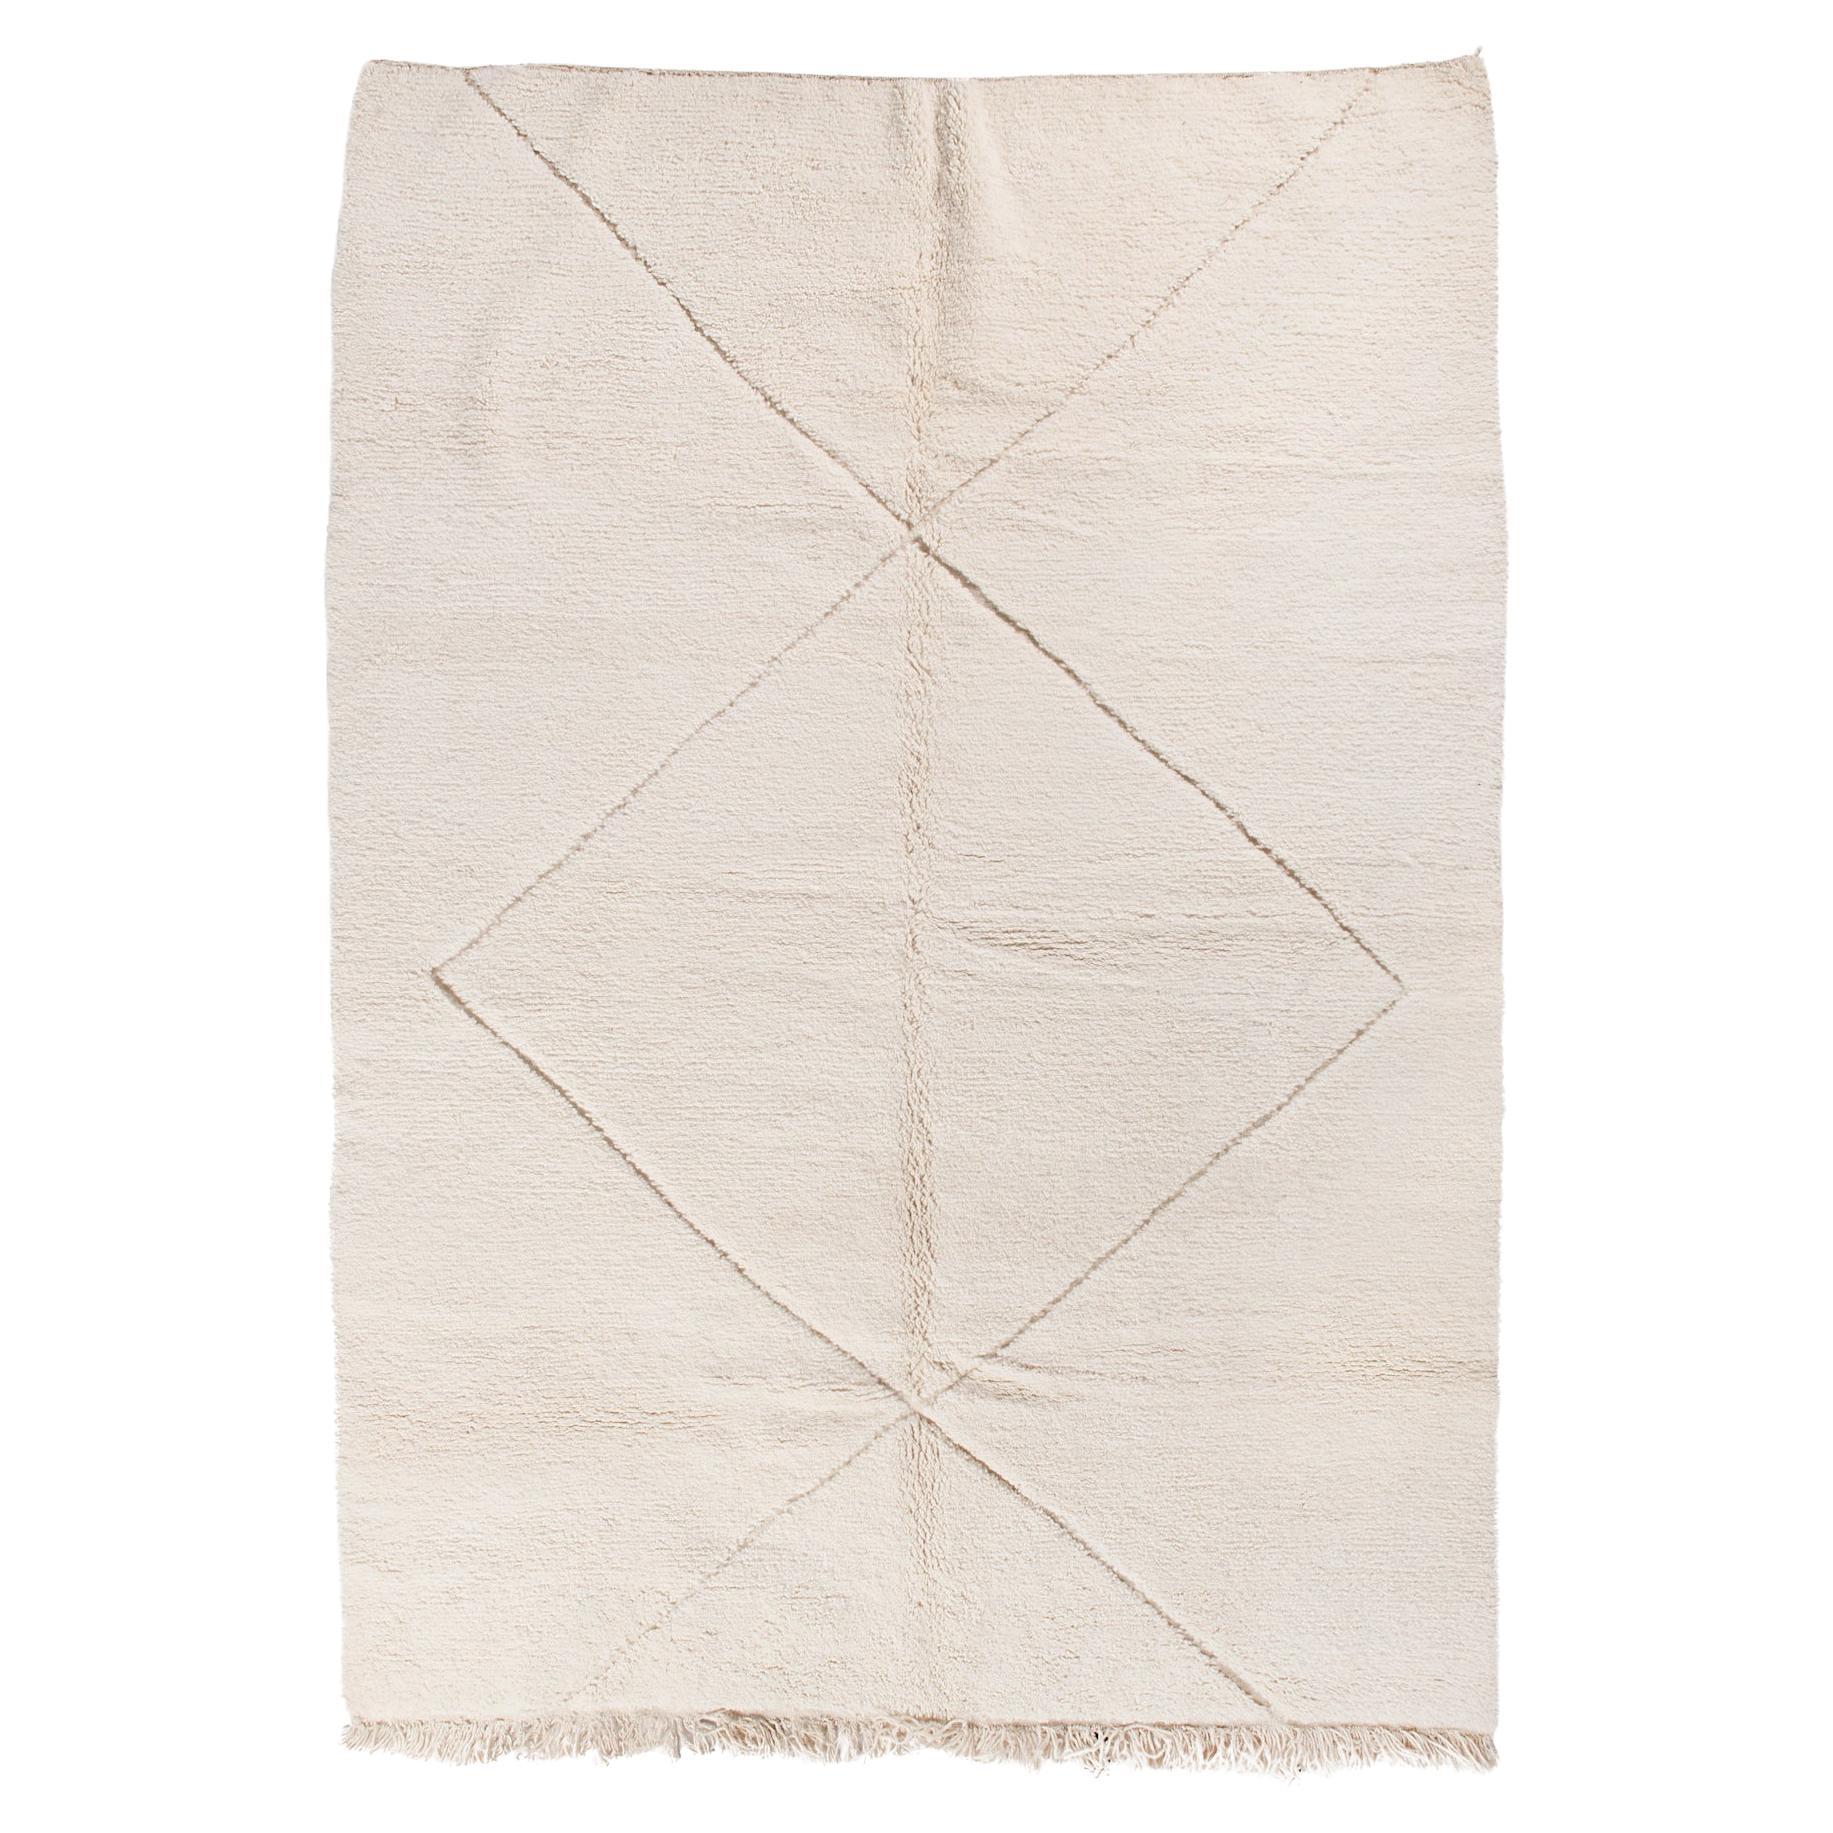 Minimalictic Beni Ourain rug / Moroccan White Diamond Pattern Rug, In Stock For Sale